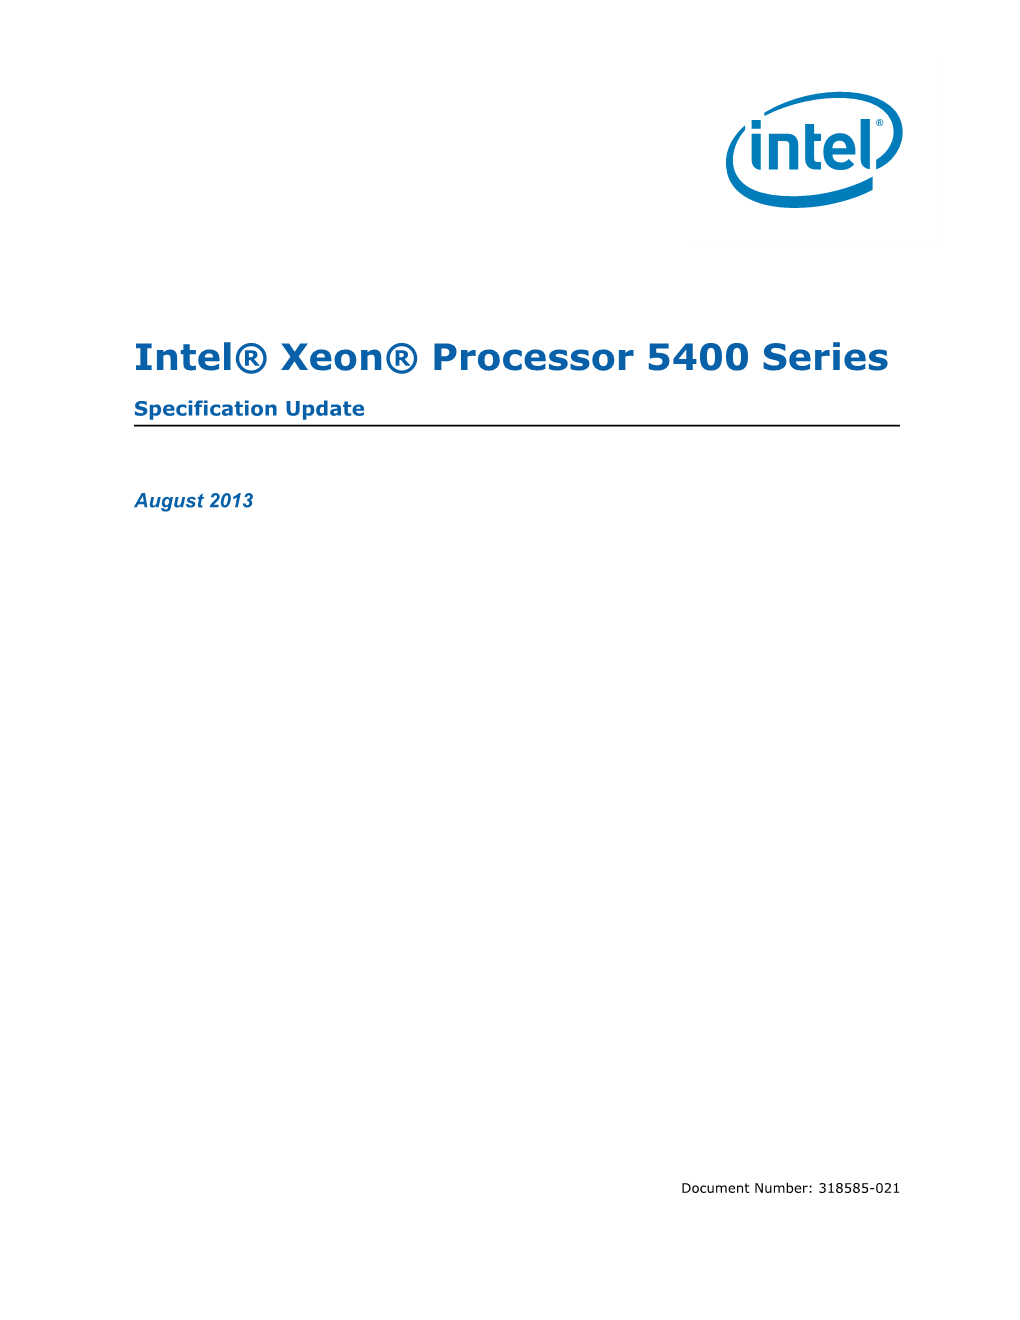 Intel® Xeon® Processor 5400 Series Specification Update Contents